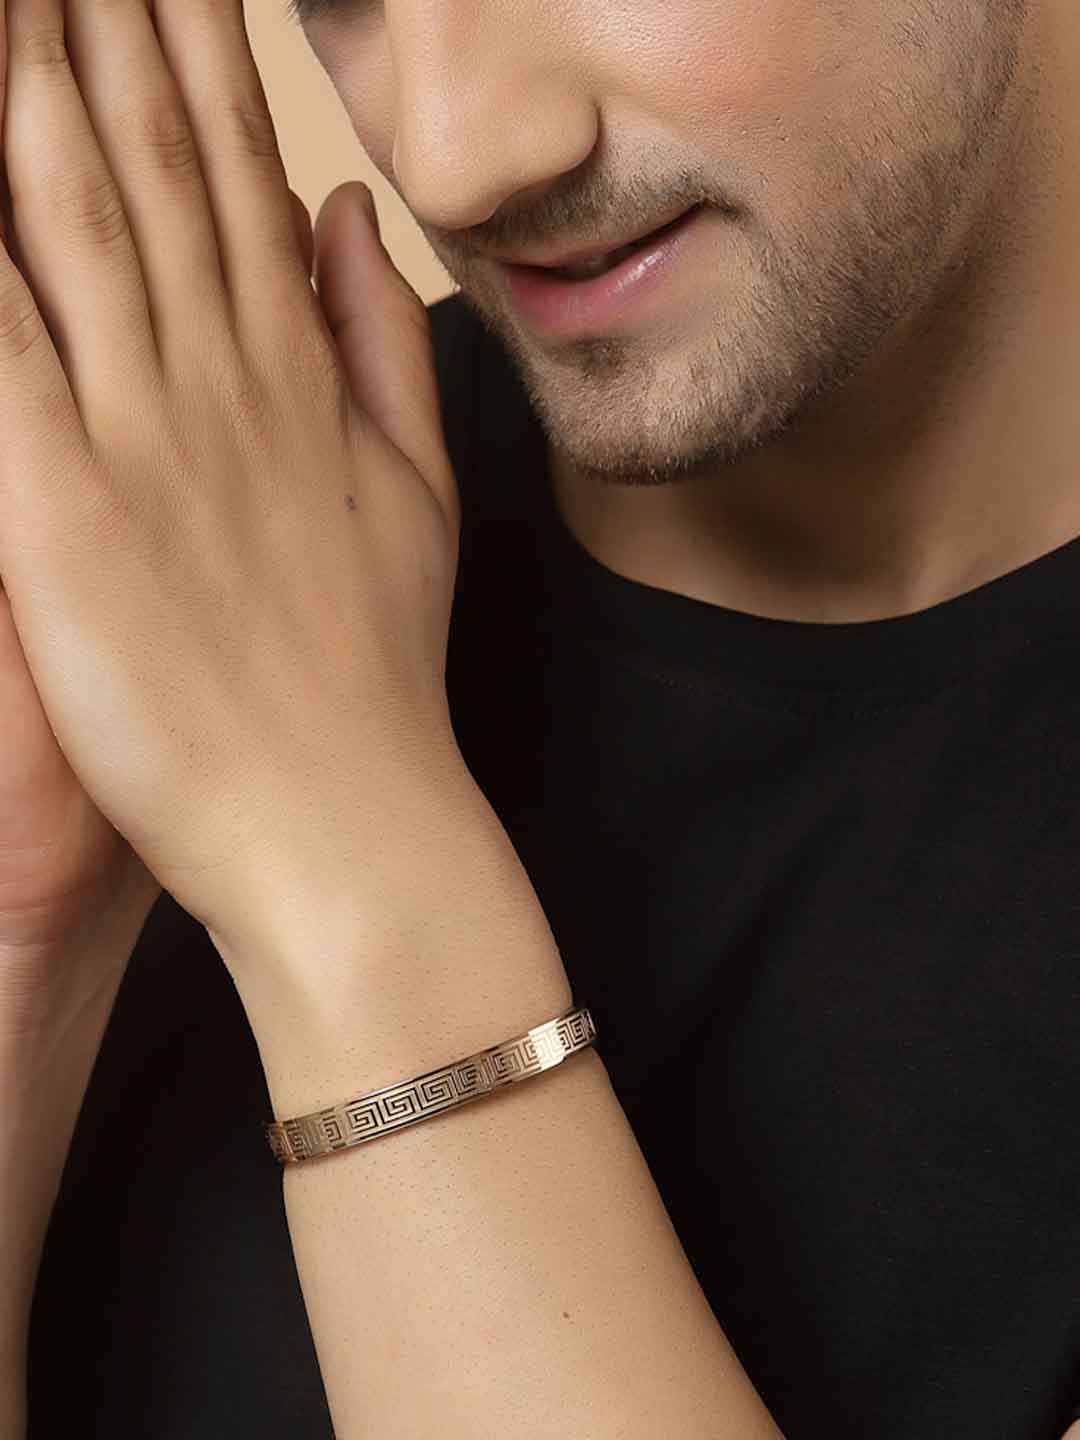 Gold Lined Kada Style Bracelet for Men Mesmerize India